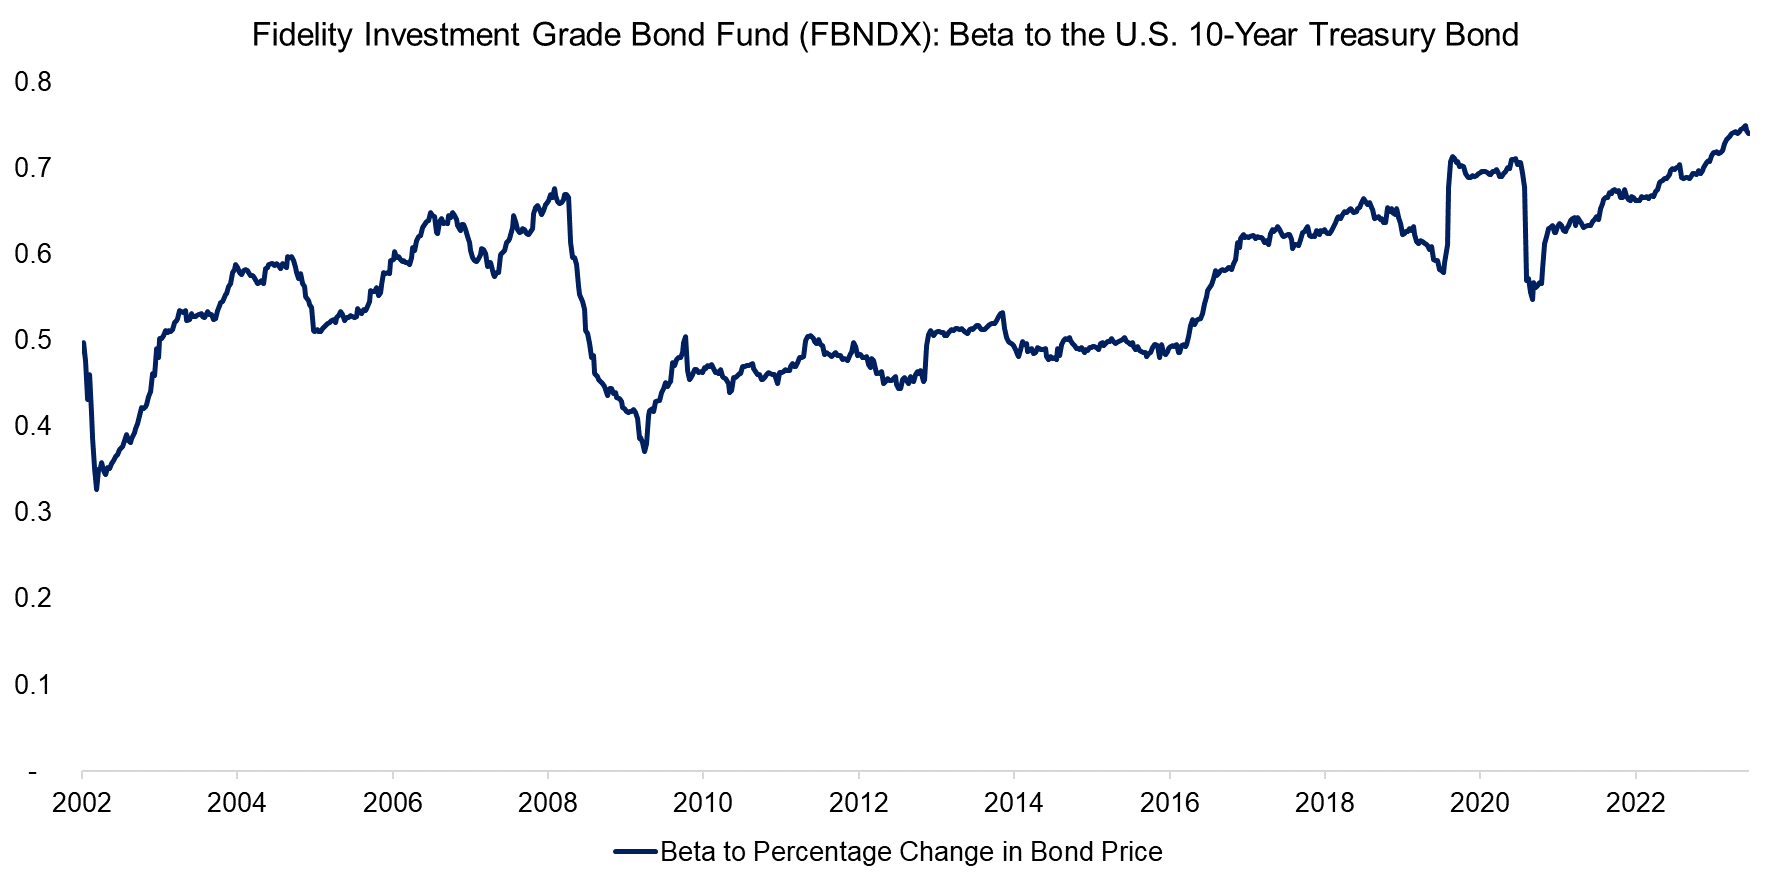 Fidelity Investment Grade Bond Fund (FBNDX) Beta to the U.S. 10-Year Treasury Bond